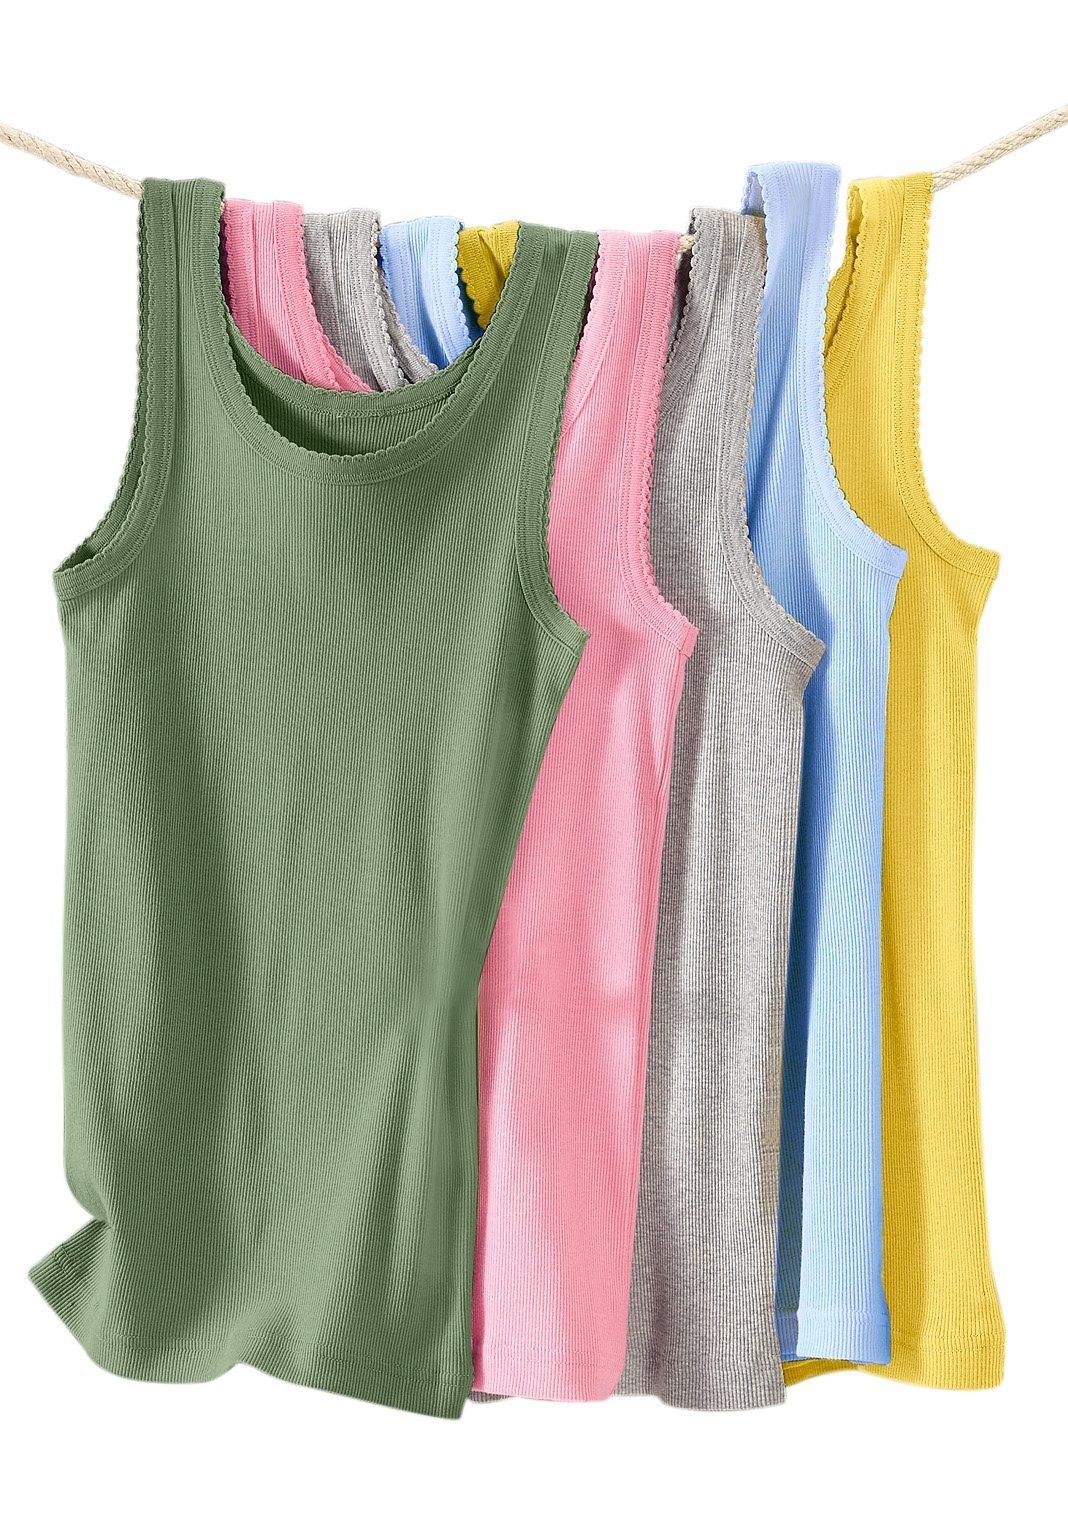 aus Unterhemd gelb, rosa, hellblau, Unterziehshirt petite fleur Tanktop, (5er-Pack) Doppelripp-Qualität, grau-meliert grün, weicher